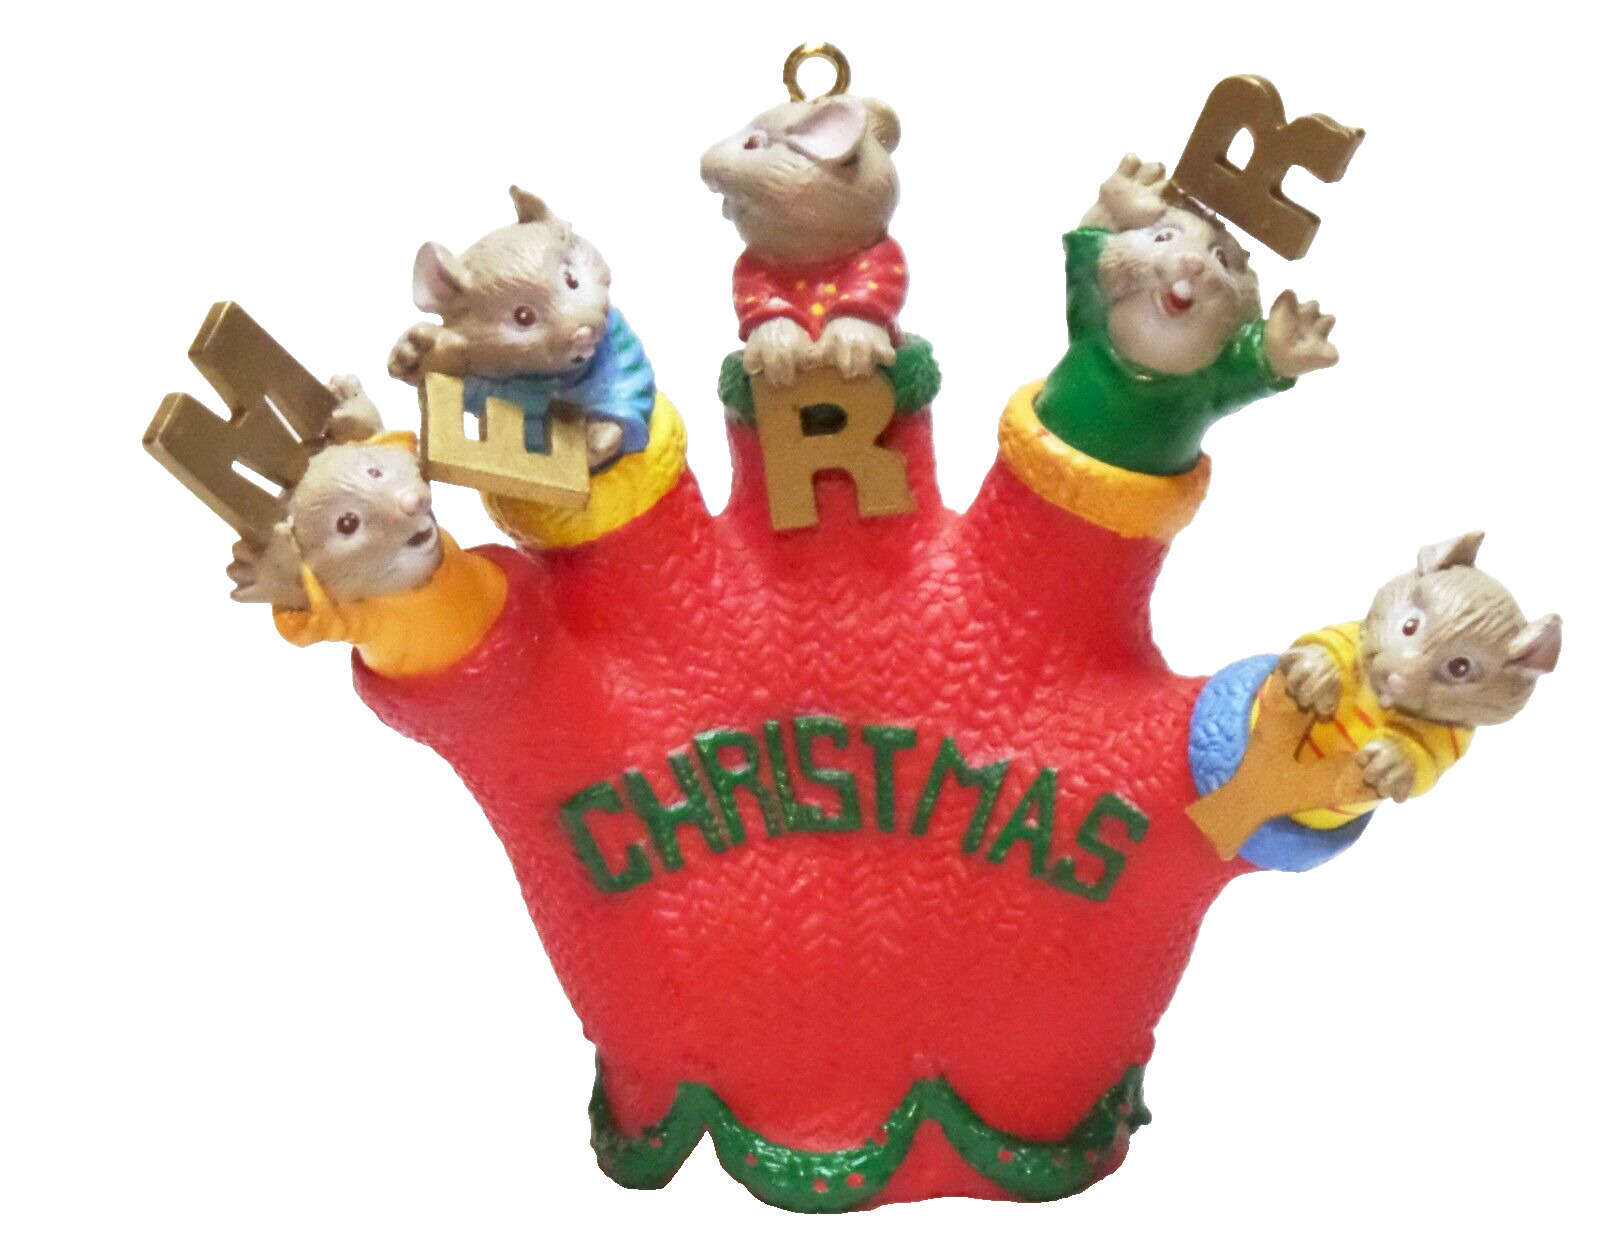 Enesco Countin On A Merry Christmas Mouse Christmas Ornament Vintage